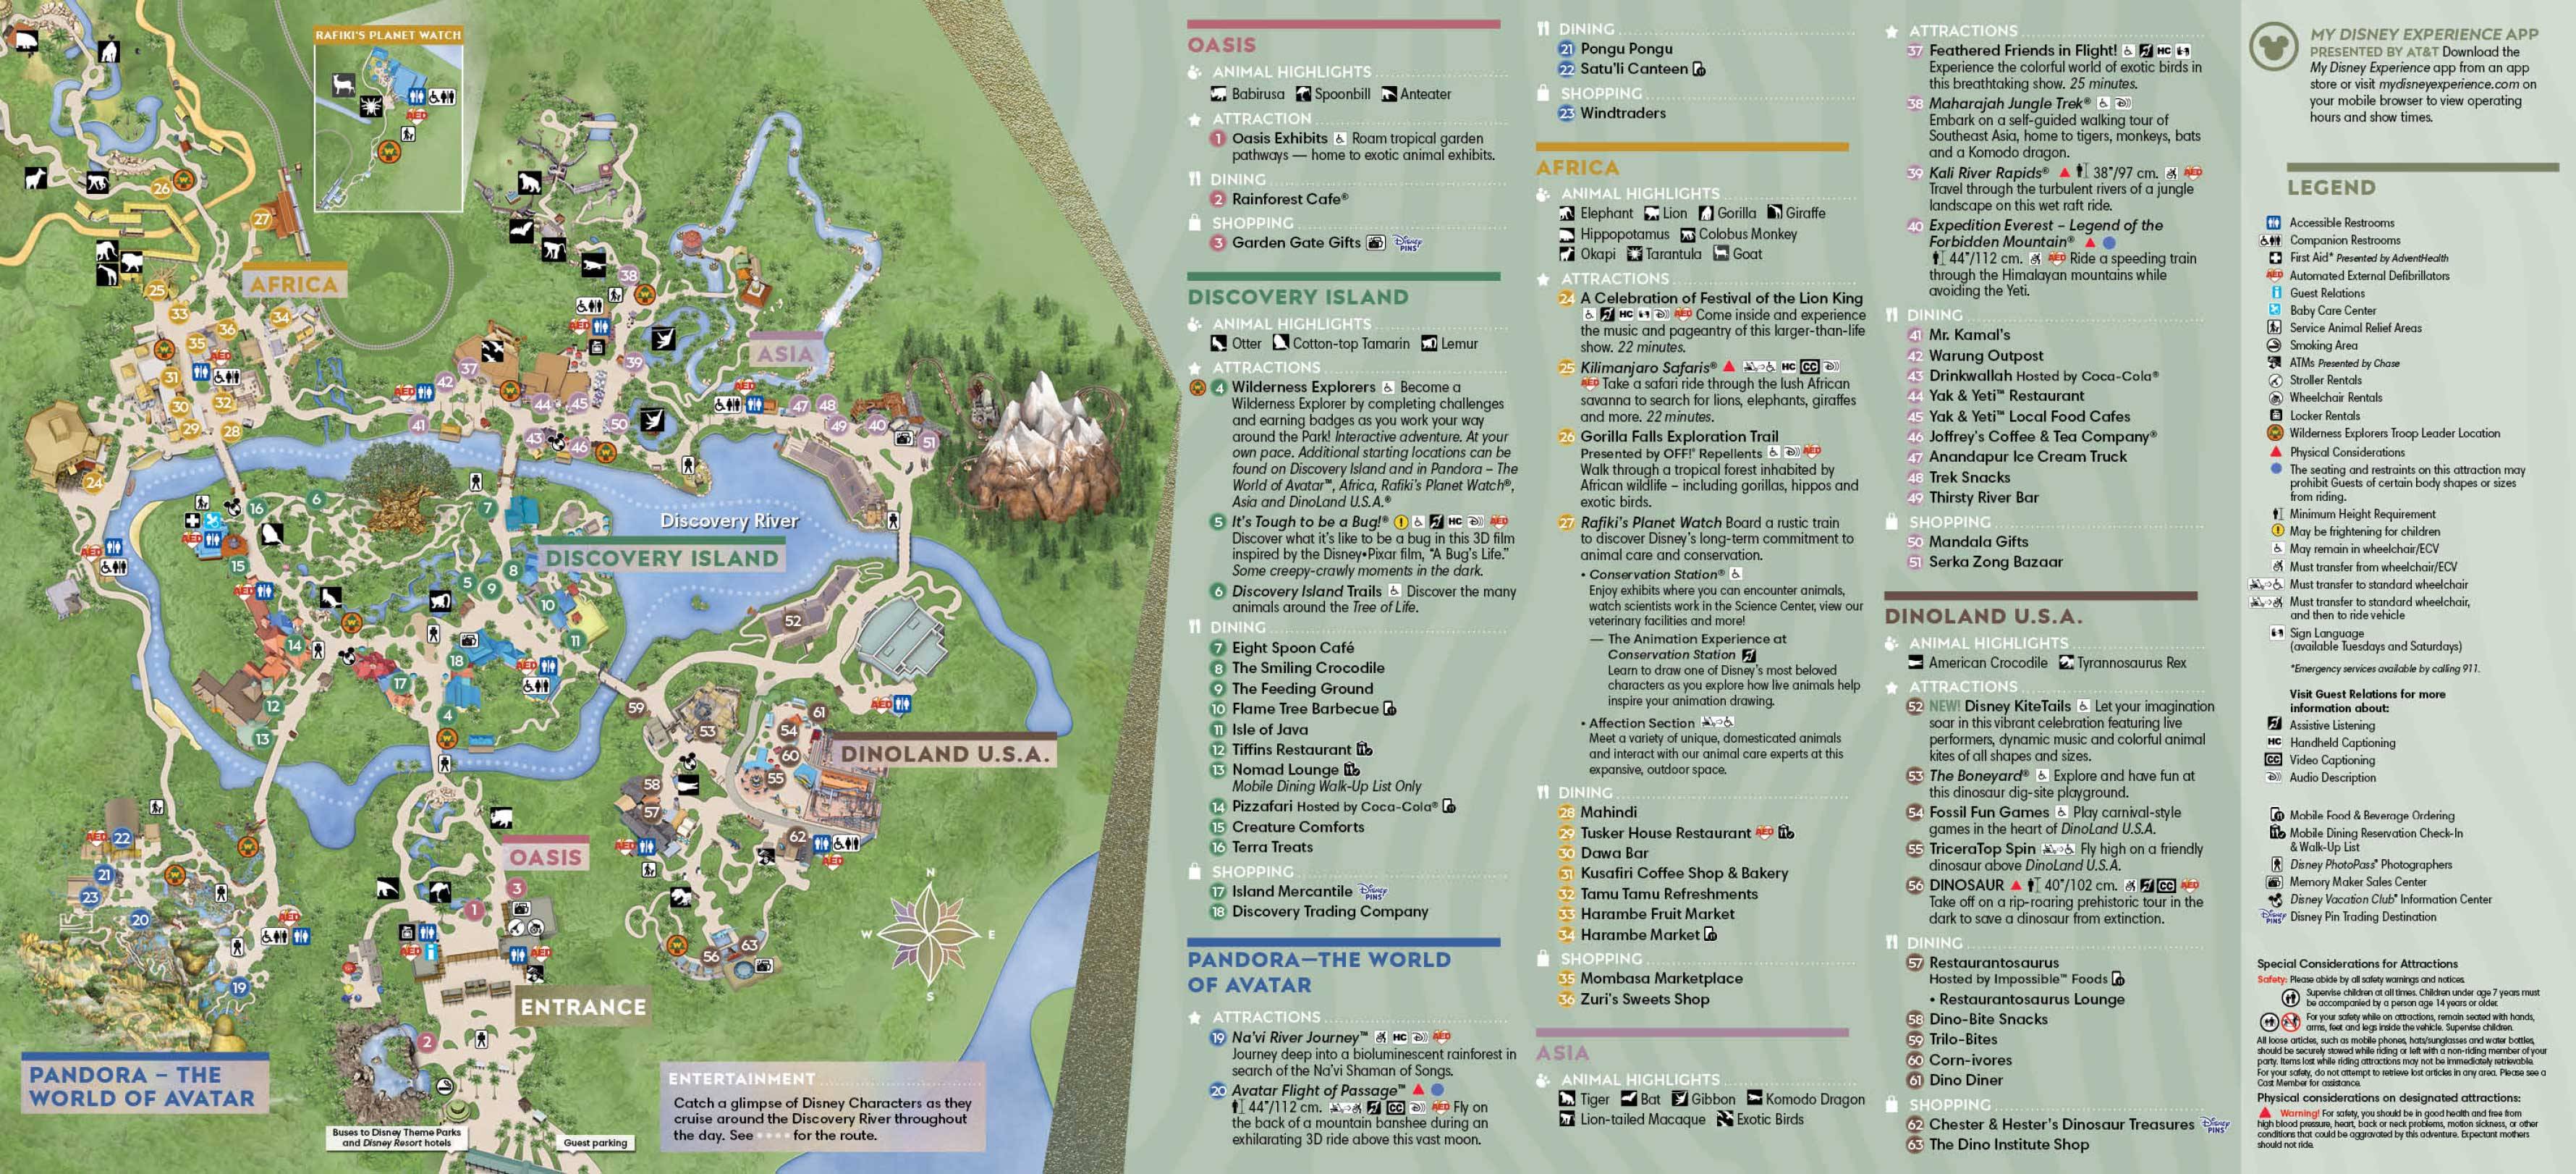 Walt Disney World 50th Anniversary Theme Park Maps October 21